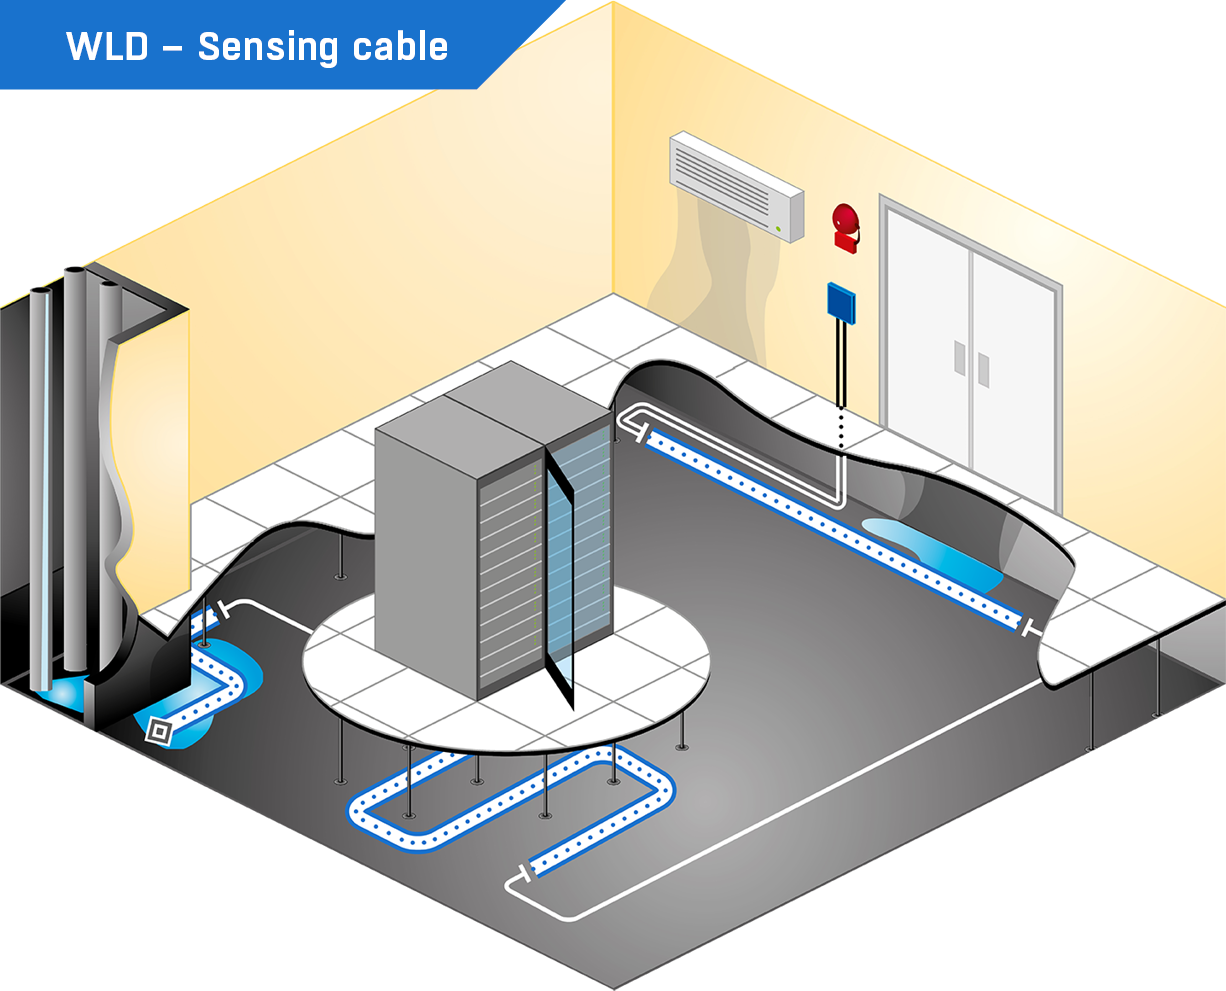 WLD Water Leak detection using sensing cable in server room